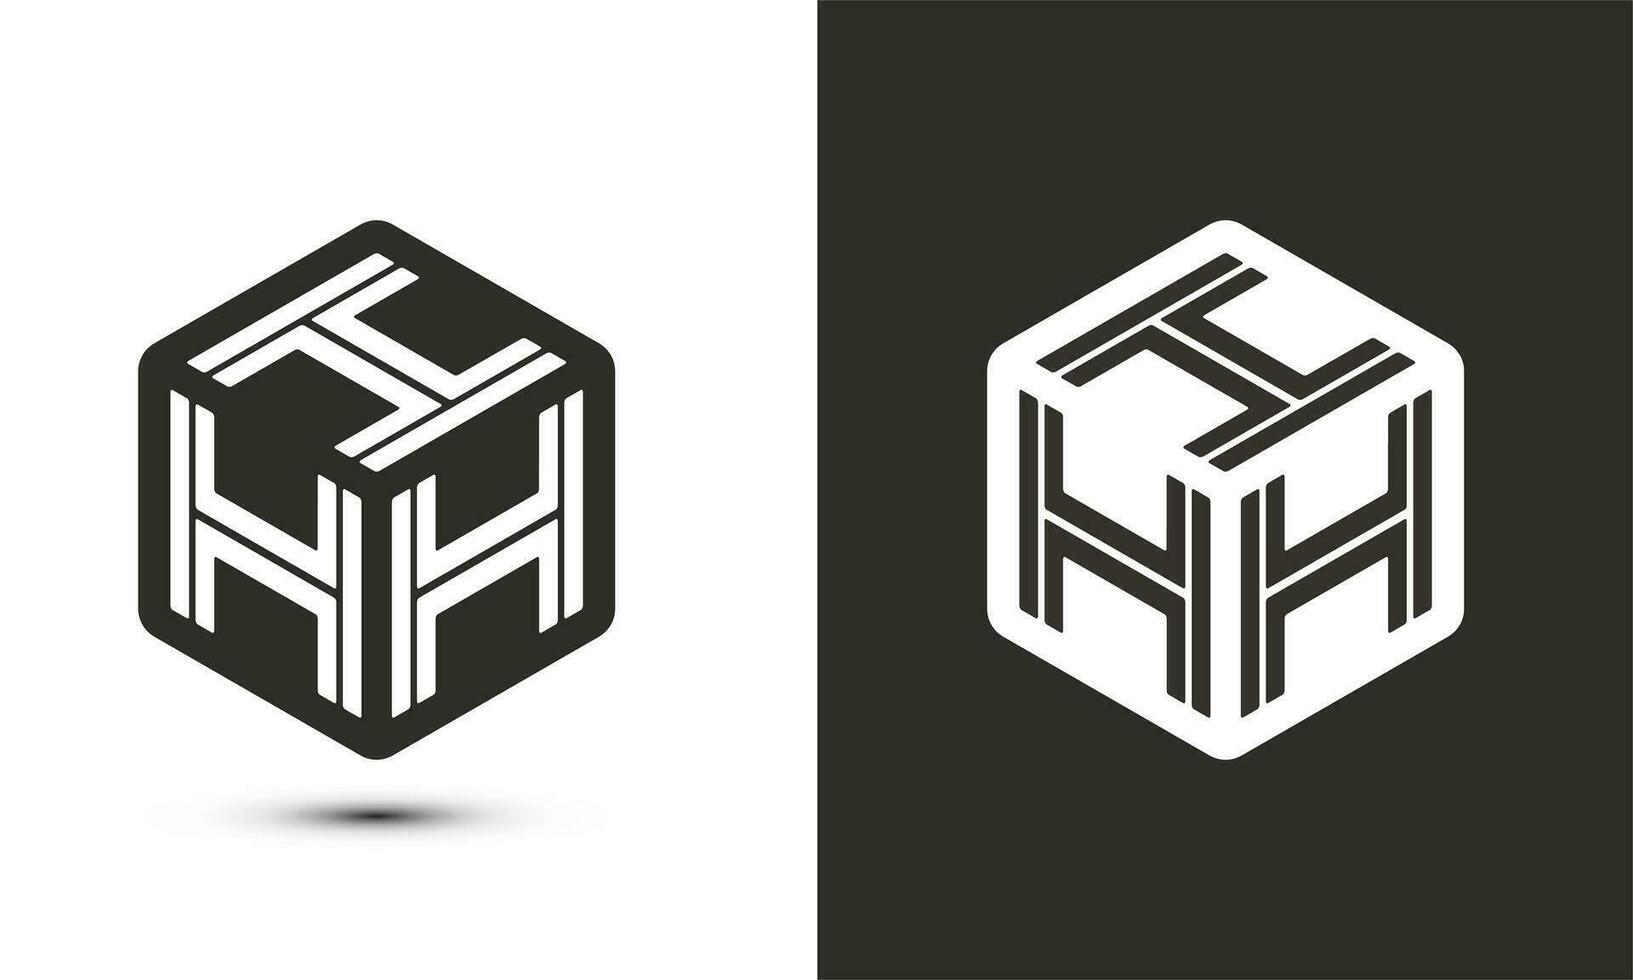 h letter logo design with illustrator cube logo, vector logo modern alphabet font overlap style. Premium Business logo icon. White color on black background